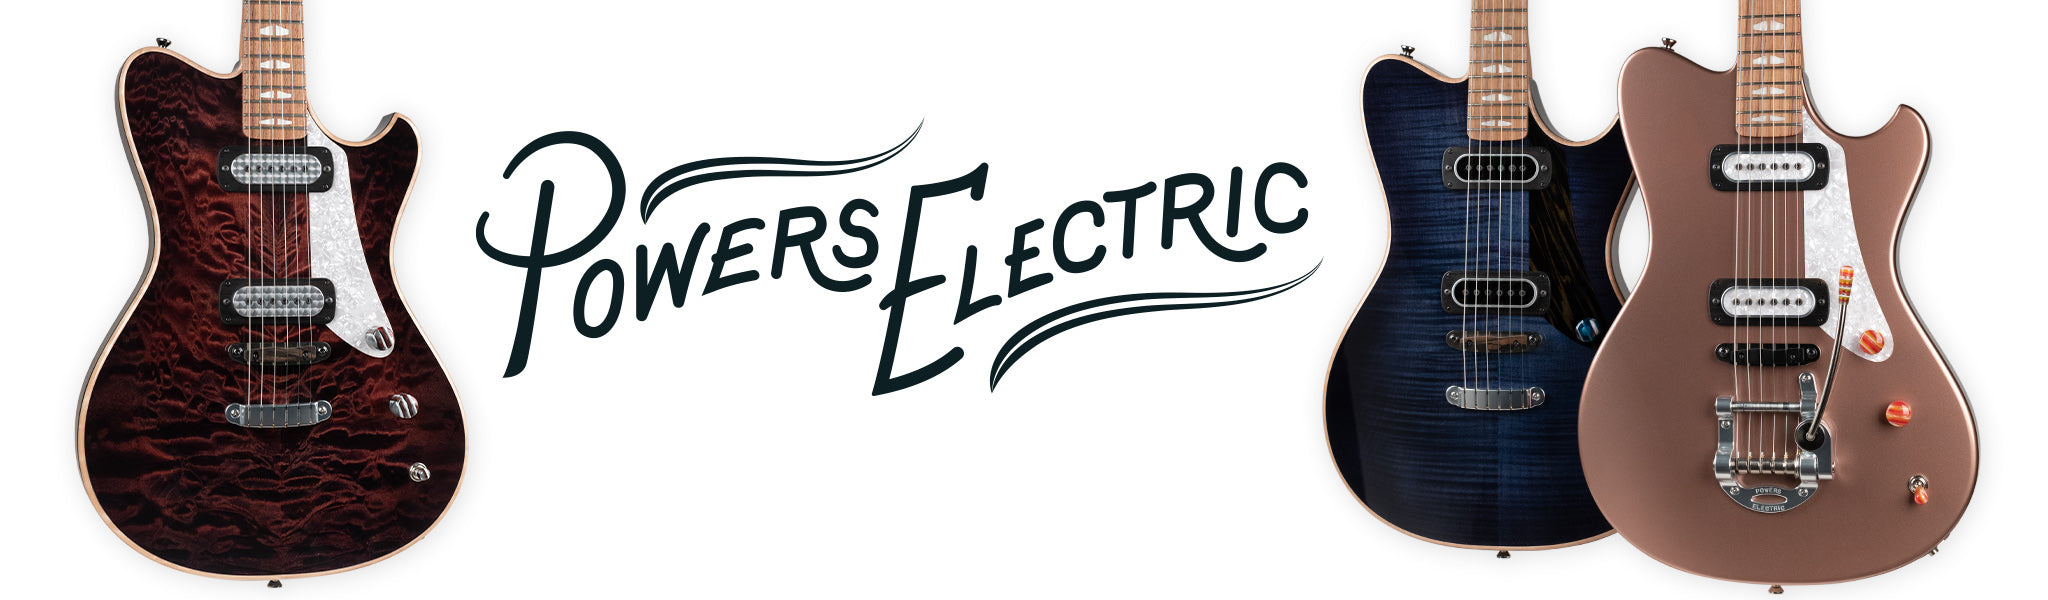 Powers Electric Guitars